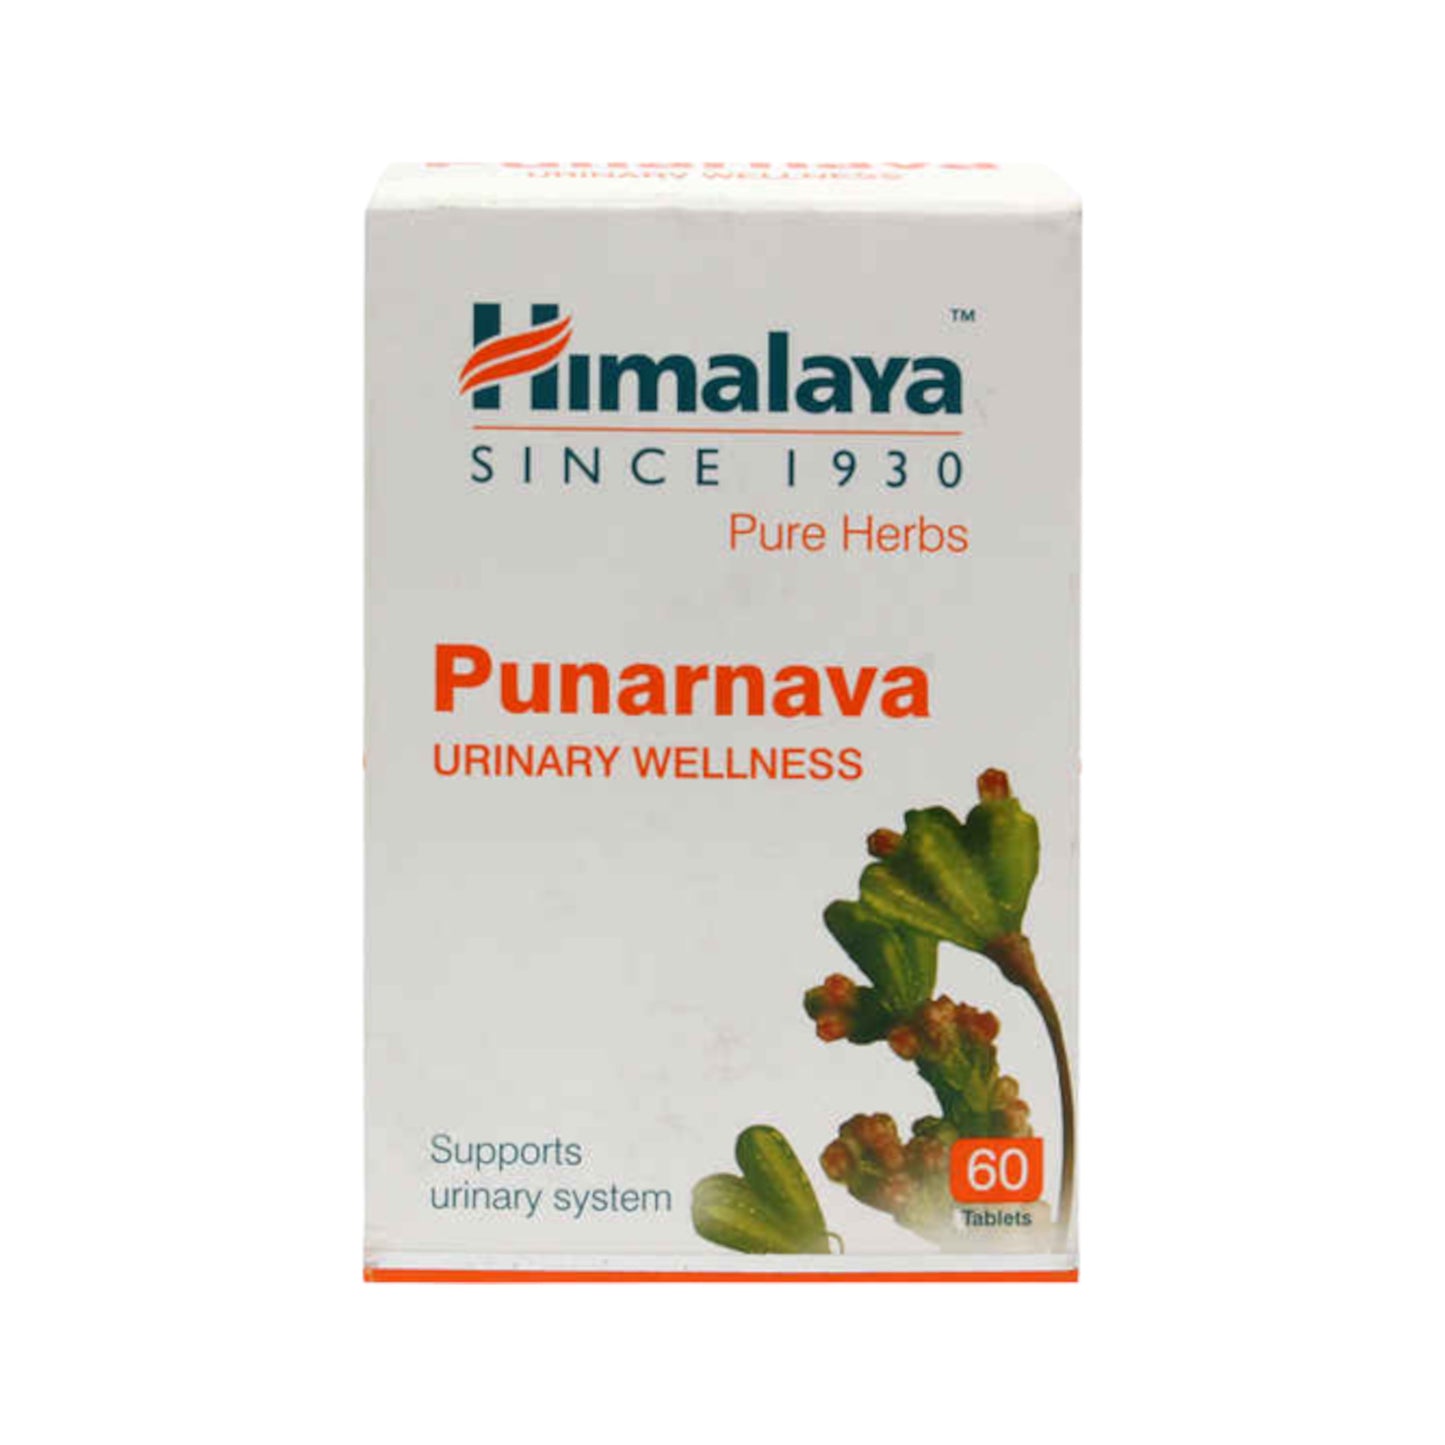 Himalaya Herbals - Punarnarva 60 Tablets